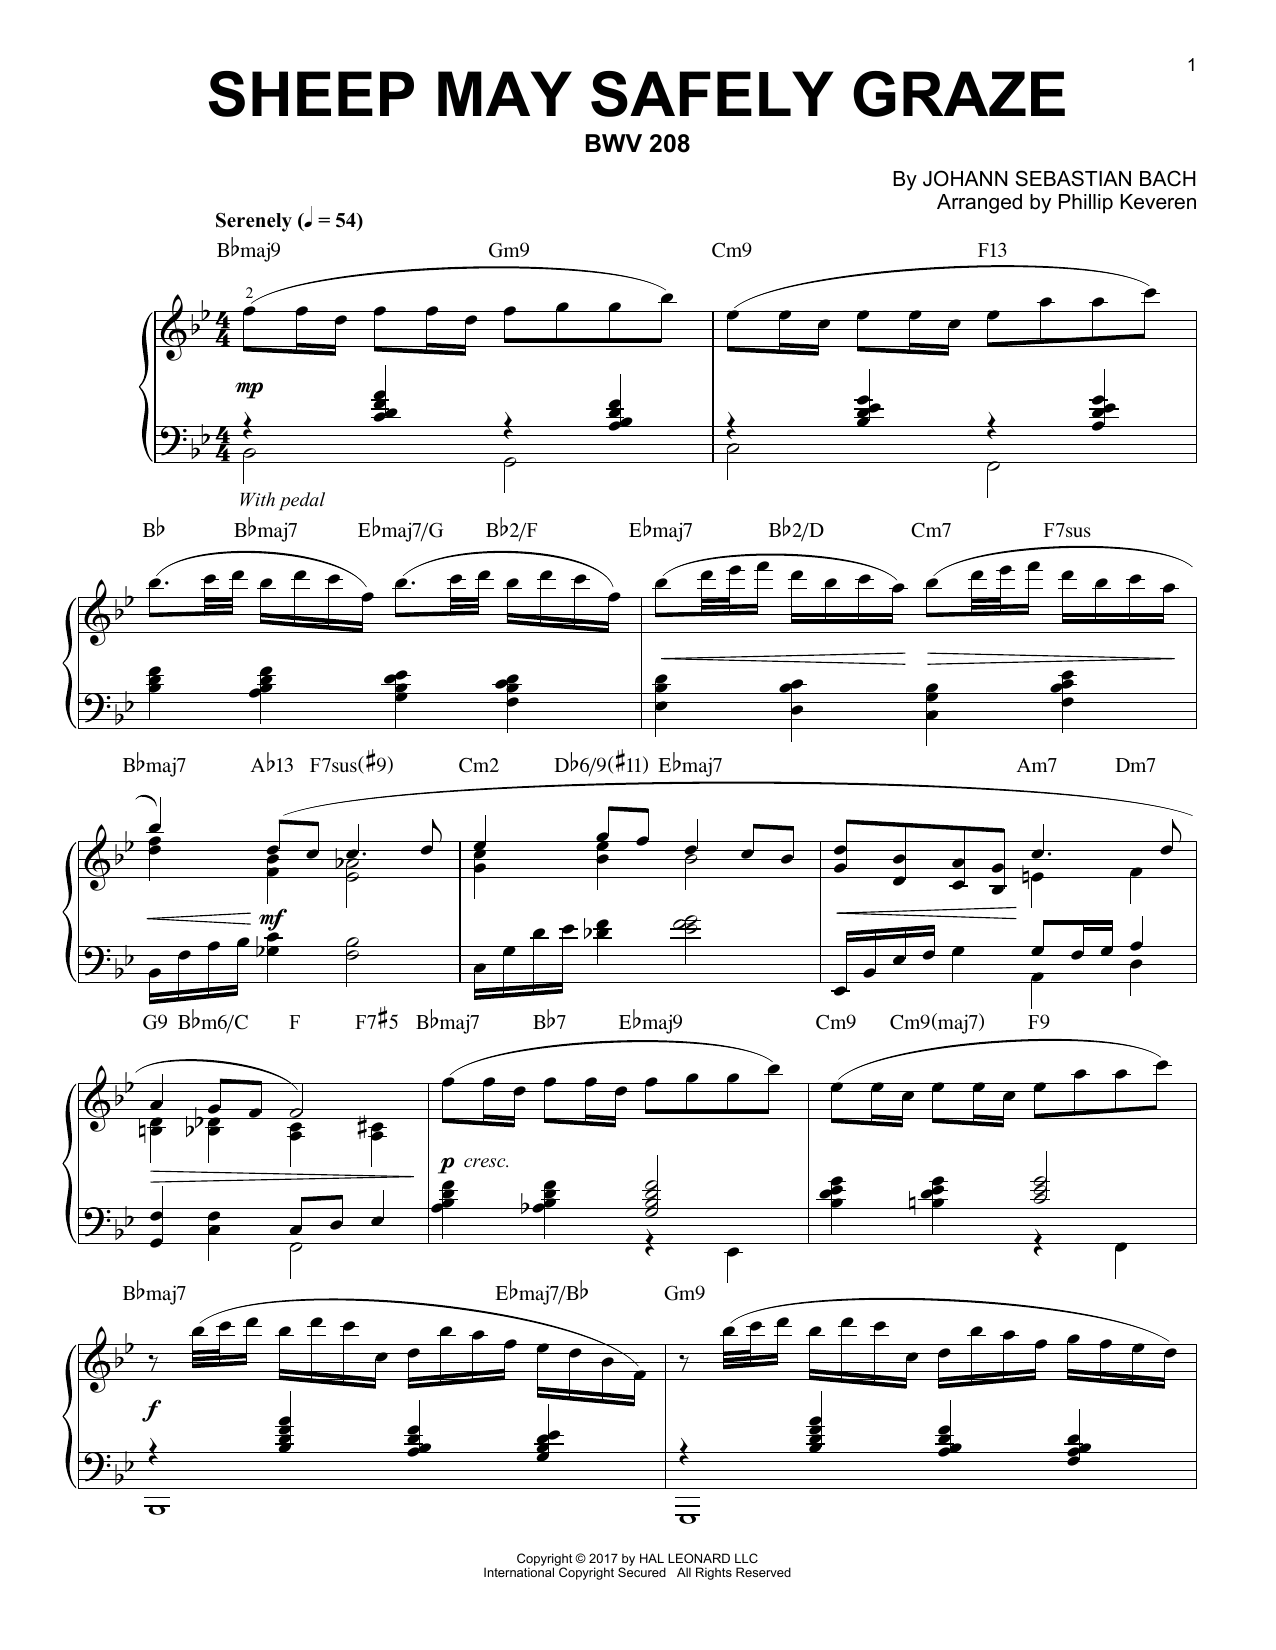 Johann Sebastian Bach Sheep May Safely Graze, BWV 208 [Jazz version] (arr. Phillip Keveren) Sheet Music Notes & Chords for Piano - Download or Print PDF